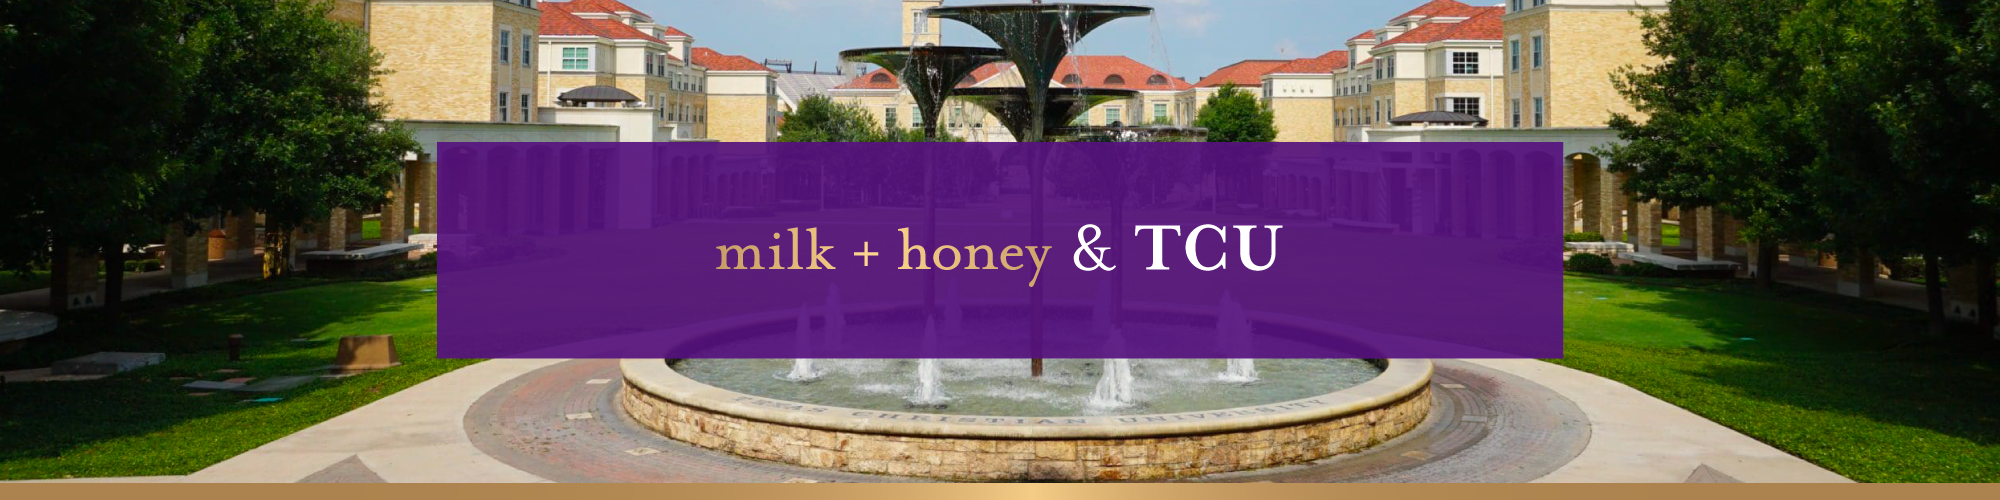 milk + honey & TCU